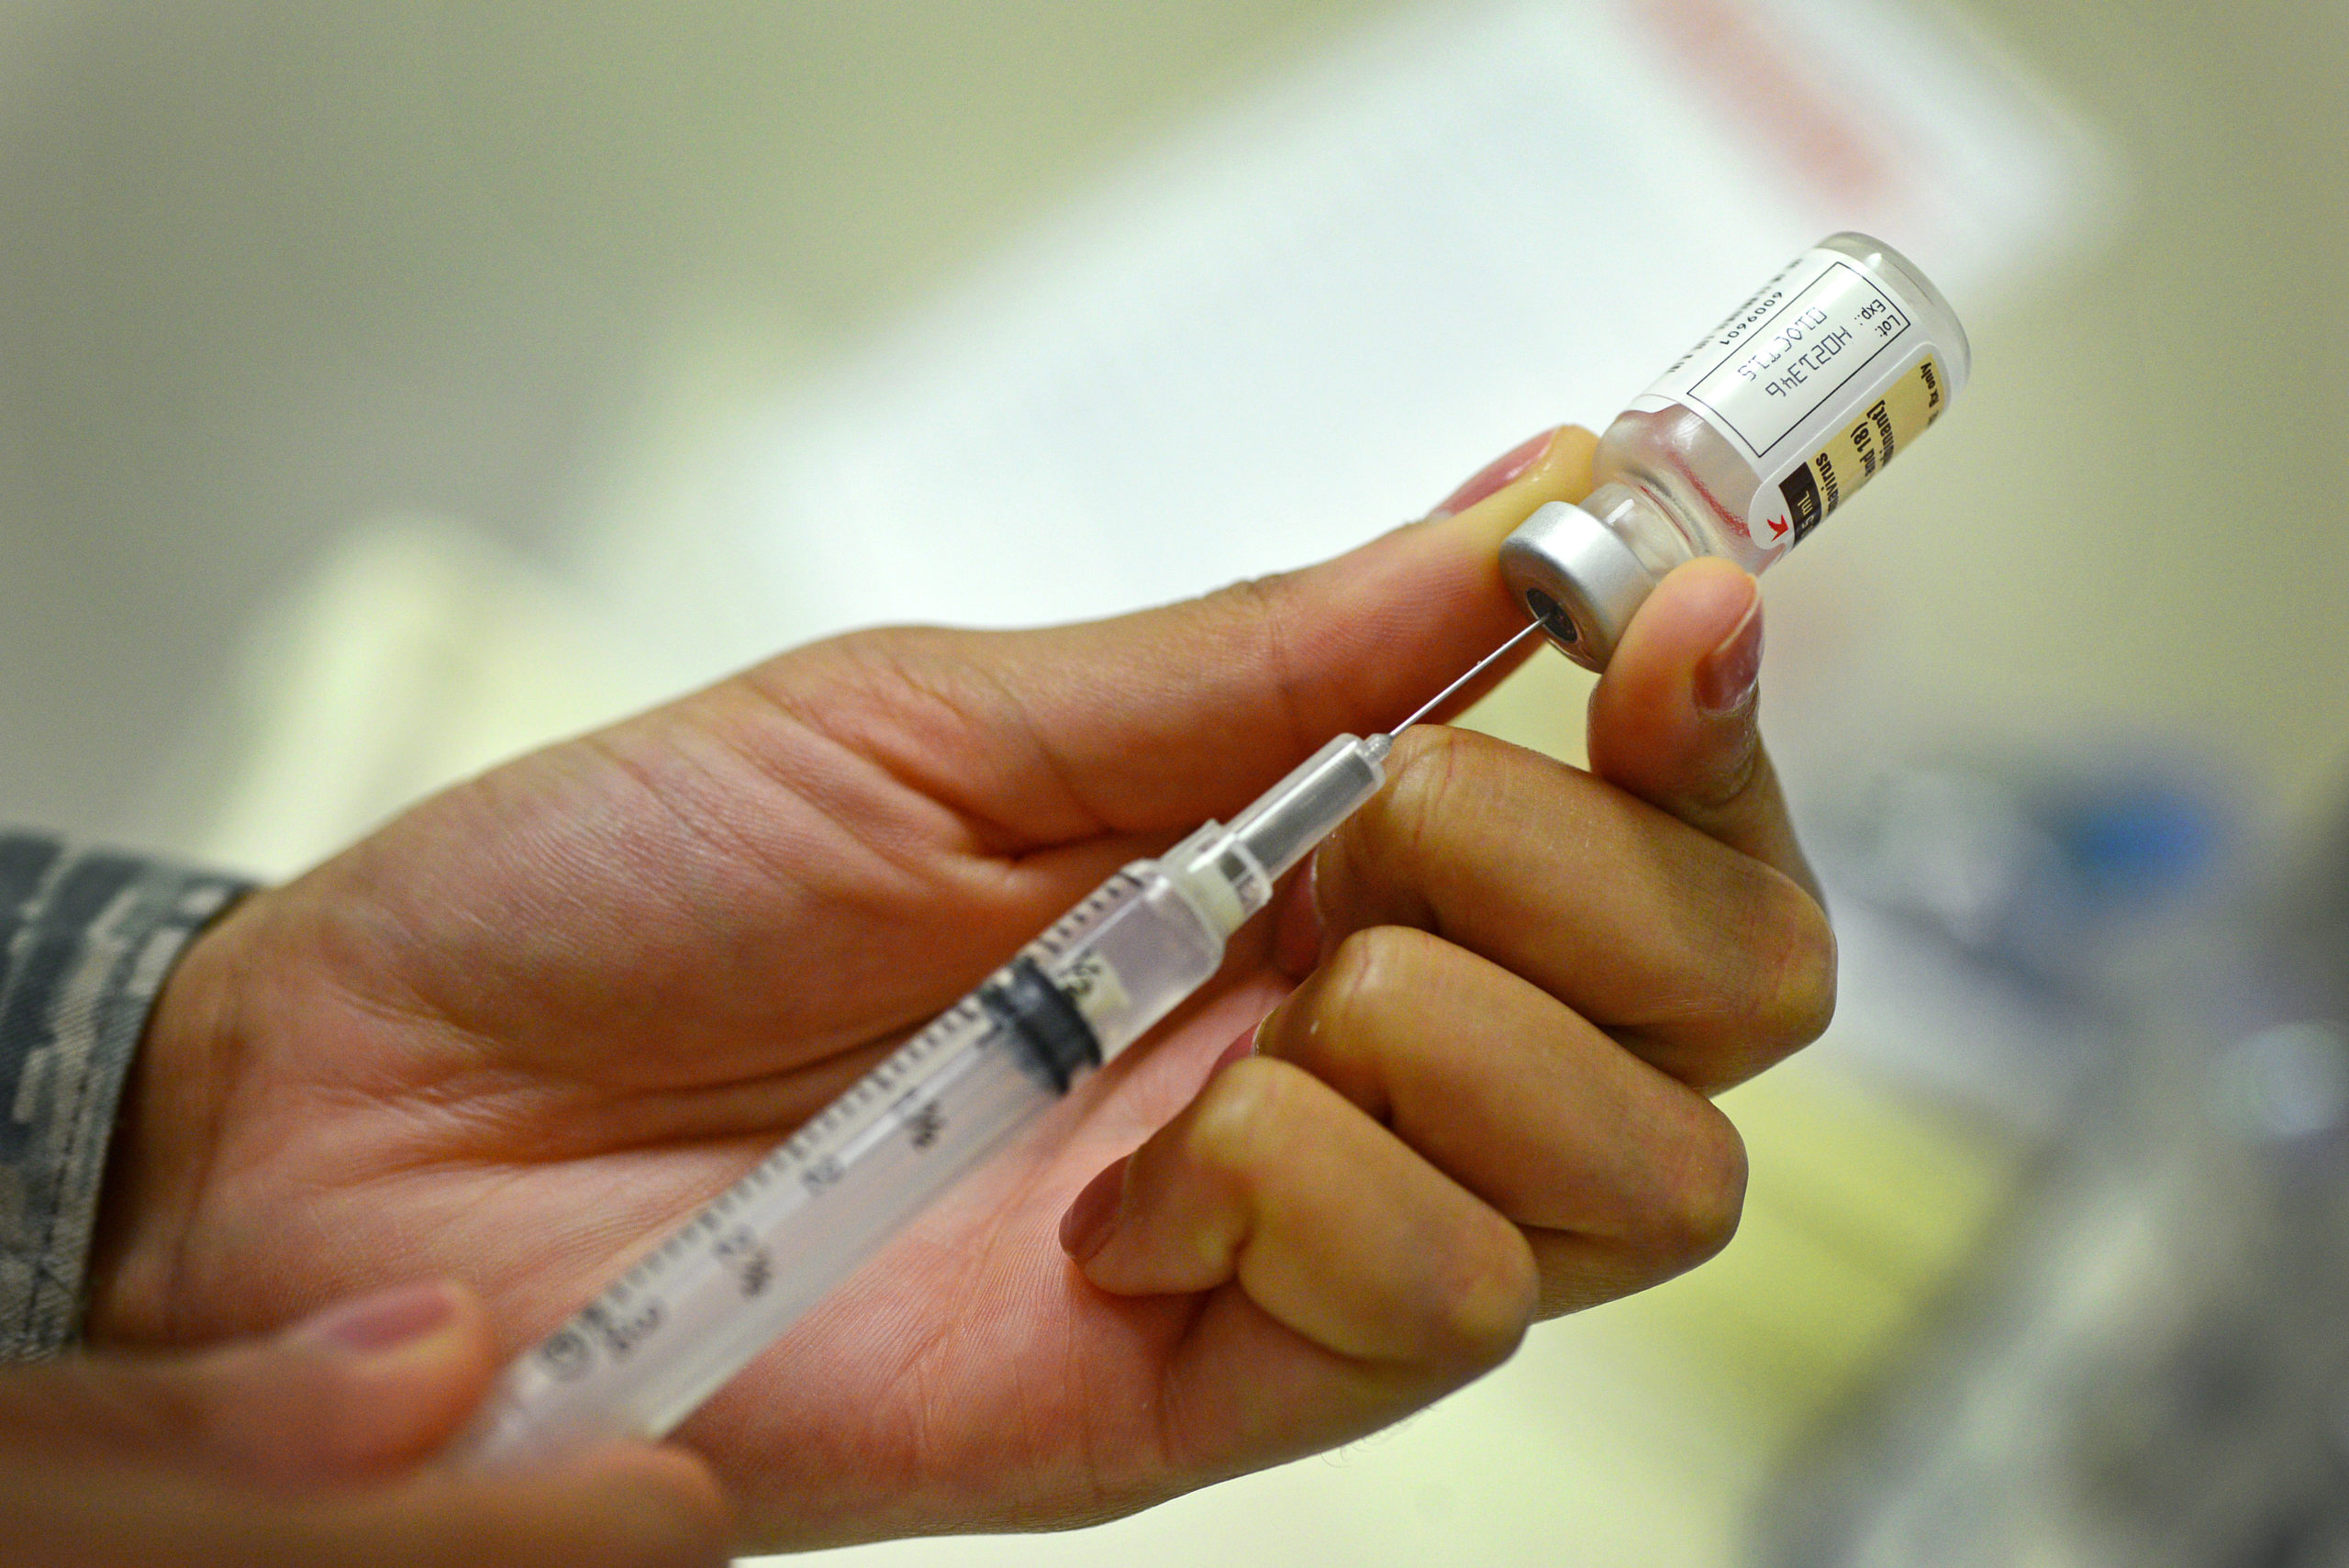 KSU, public health departments prepare in case of measles outbreak